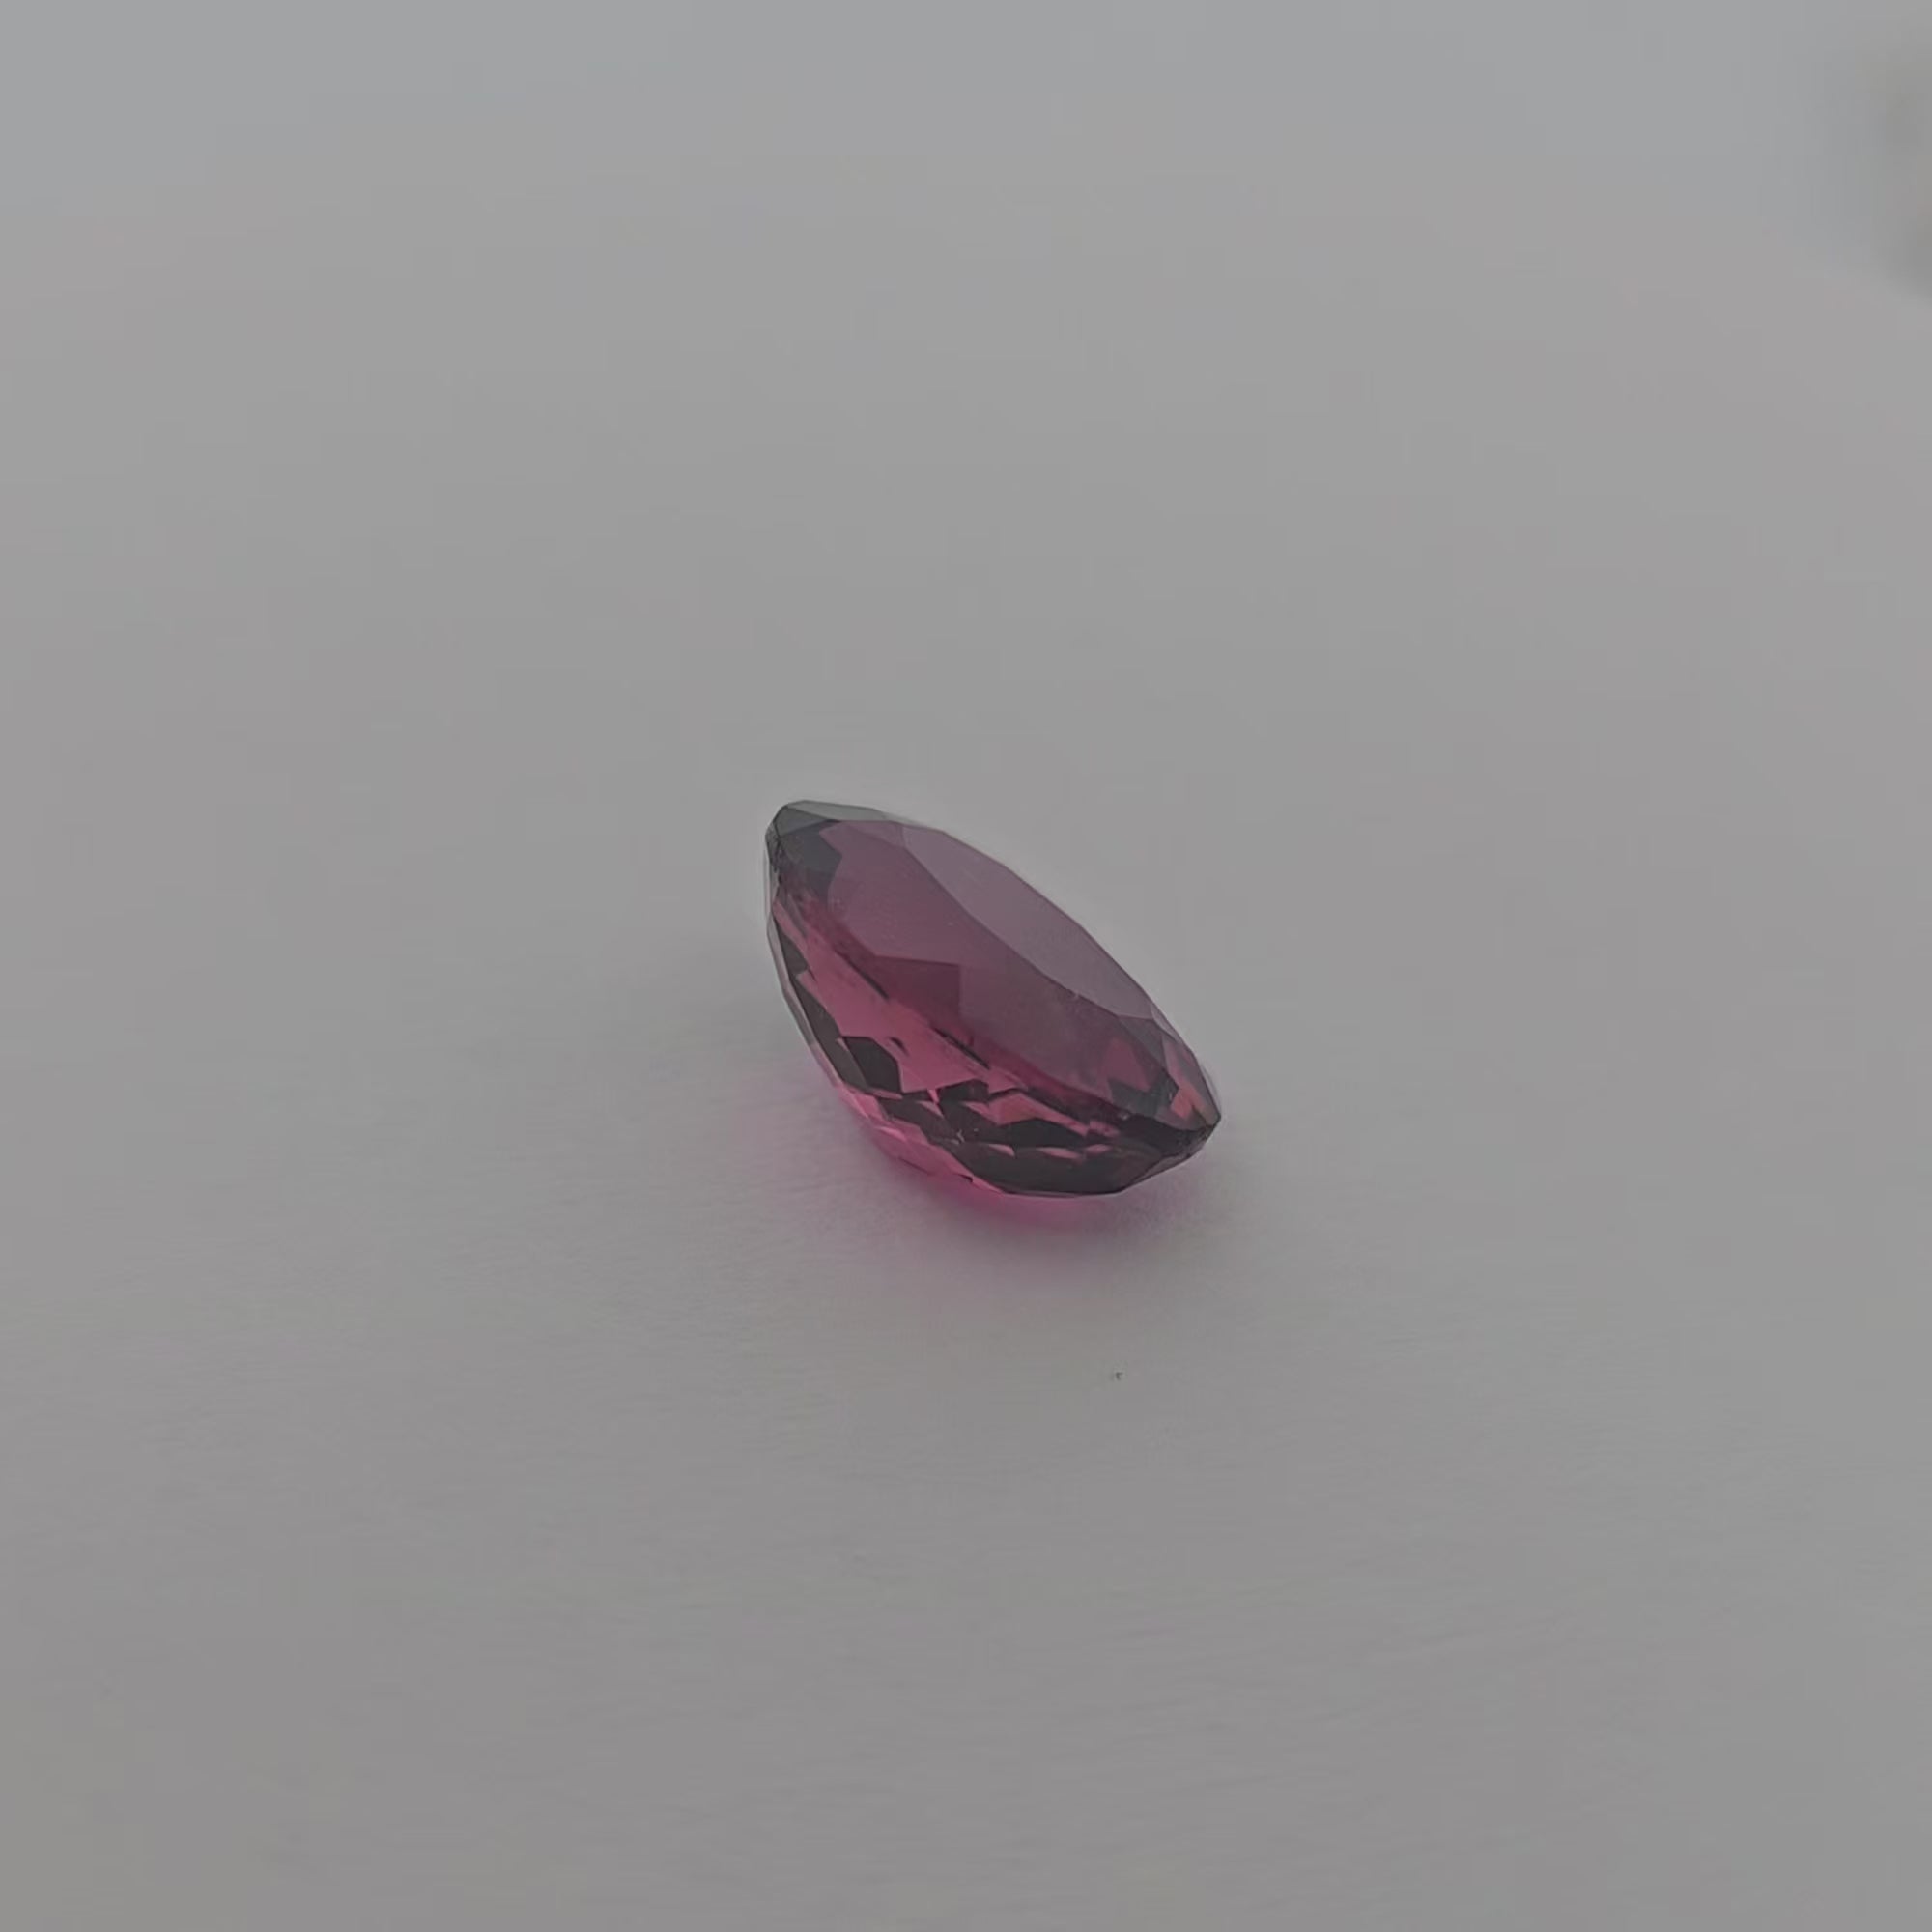 loose Natural Pink Tourmaline Stone 5.12 Carats Oval Shape (12.1 x 10.1  mm)